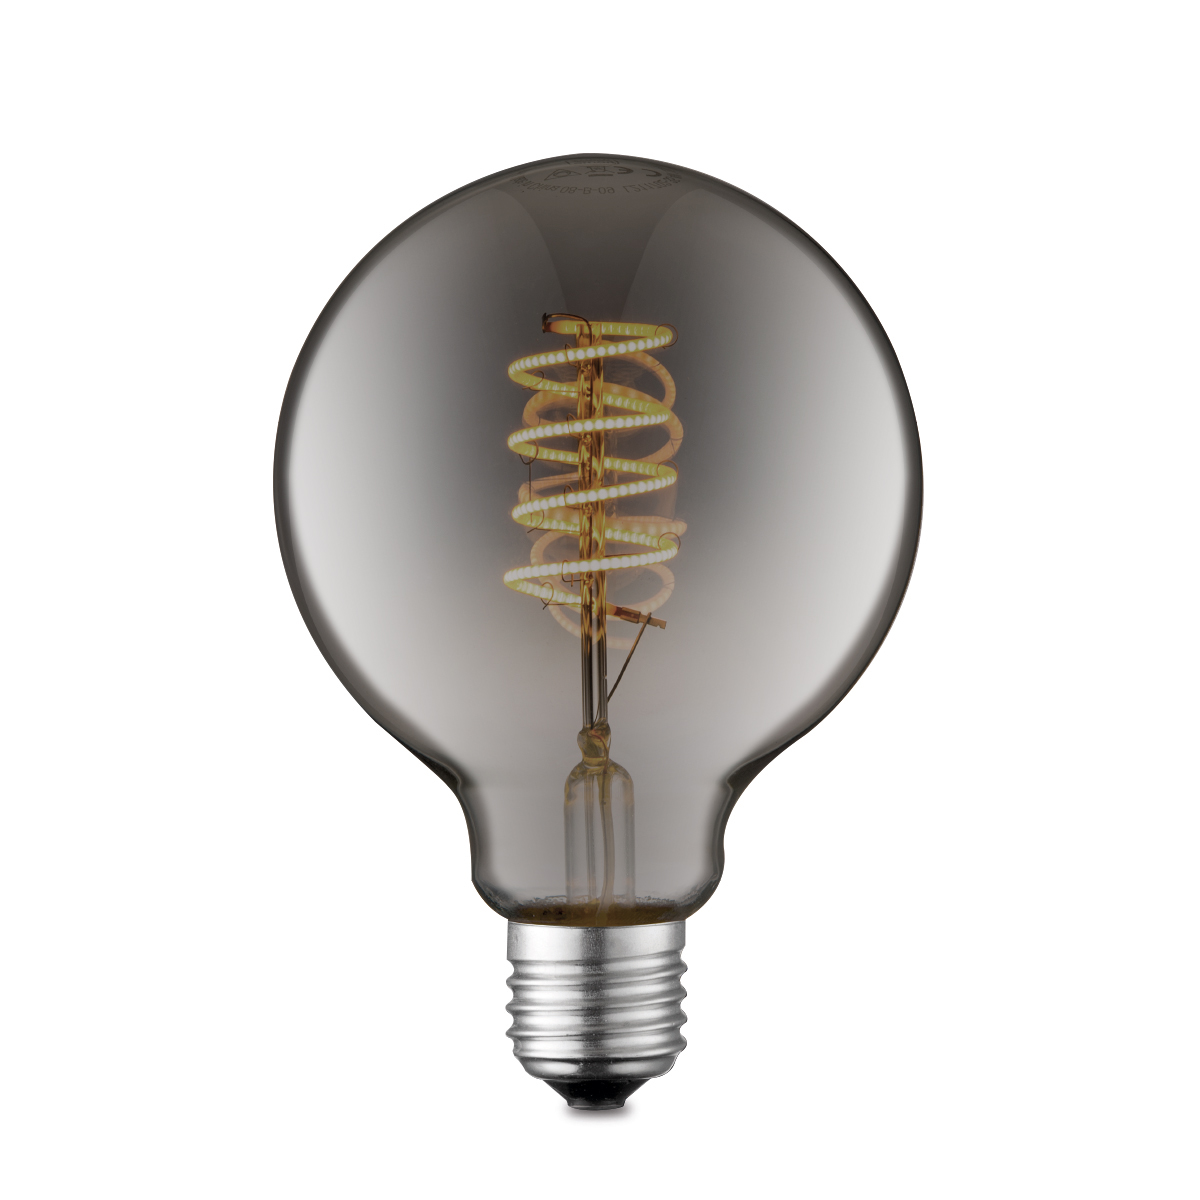 Tangla lighting - TLB-8008-04TM - LED Light Bulb Double Spiral filament - G95 4W titanium - dimmable - E27